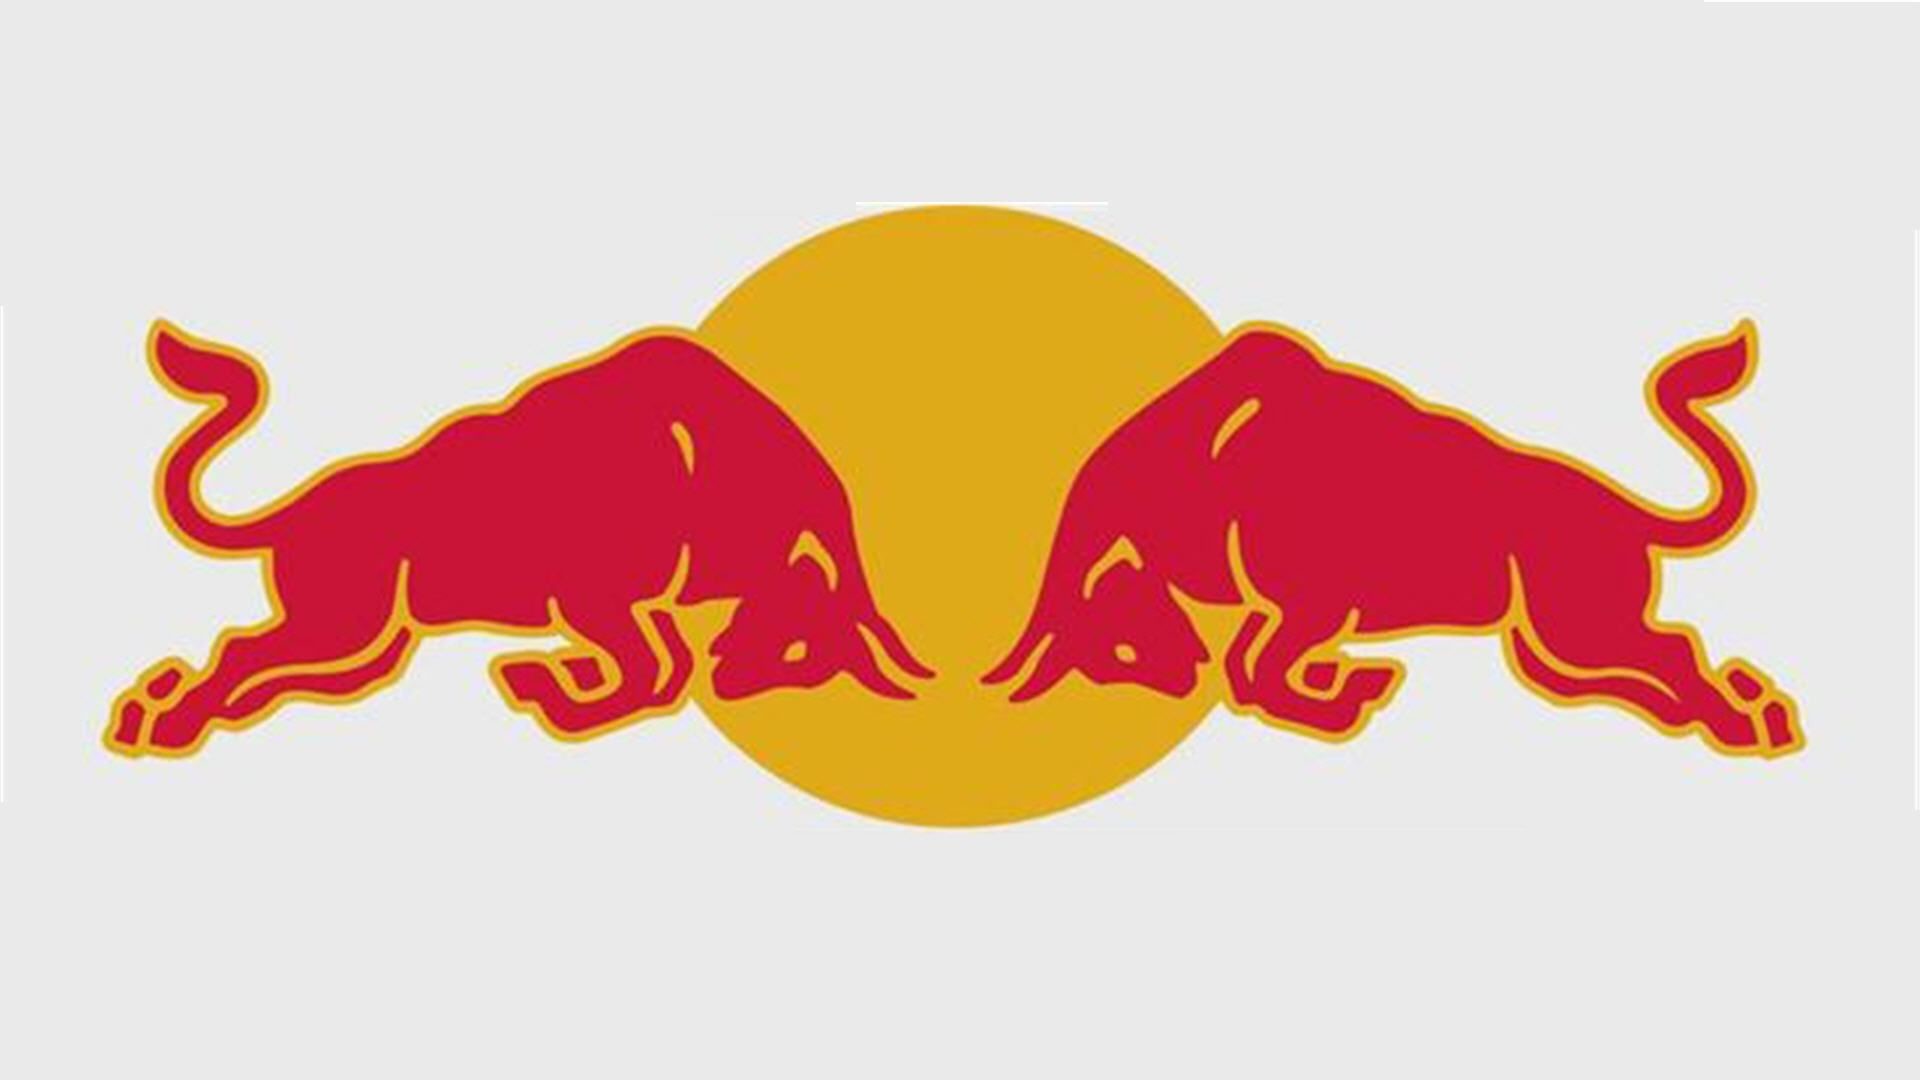 1920x1080 Amazing Logo Wallpaper HD Red Bull Image Gallery Free Download Logo